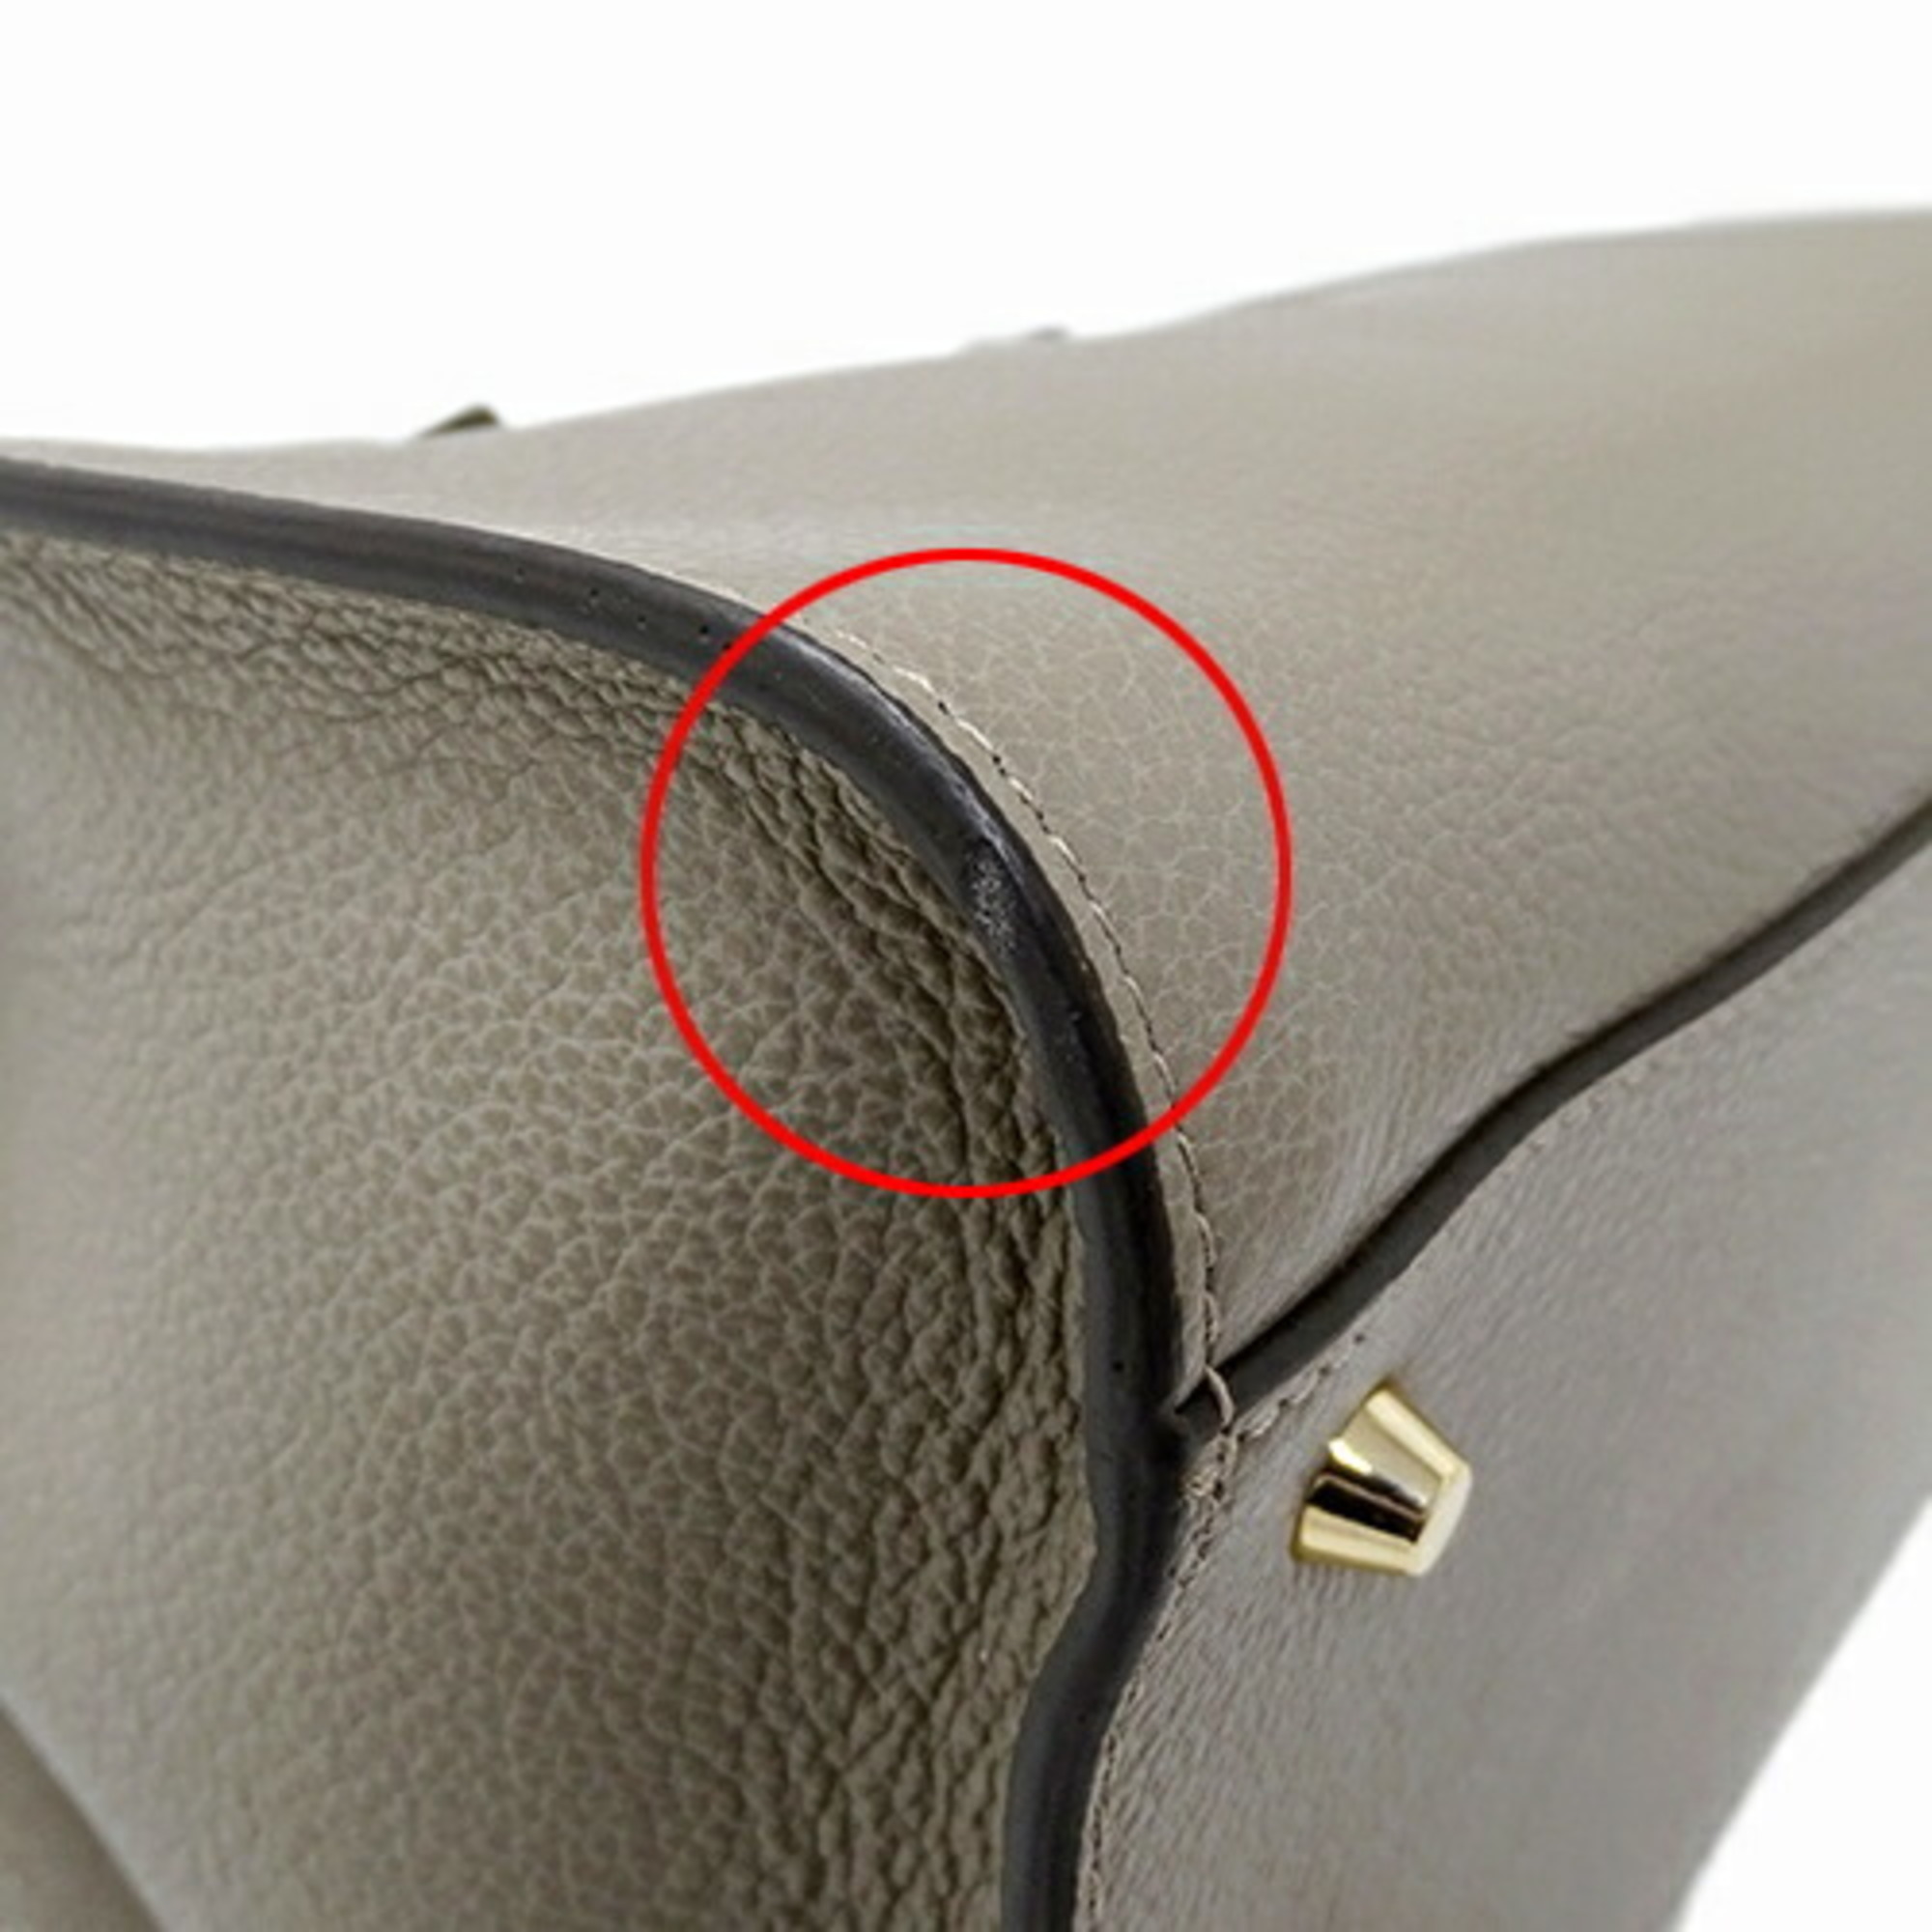 Furla Bag Women's Brand Handbag Shoulder 2way Leather Pin Greige Compact